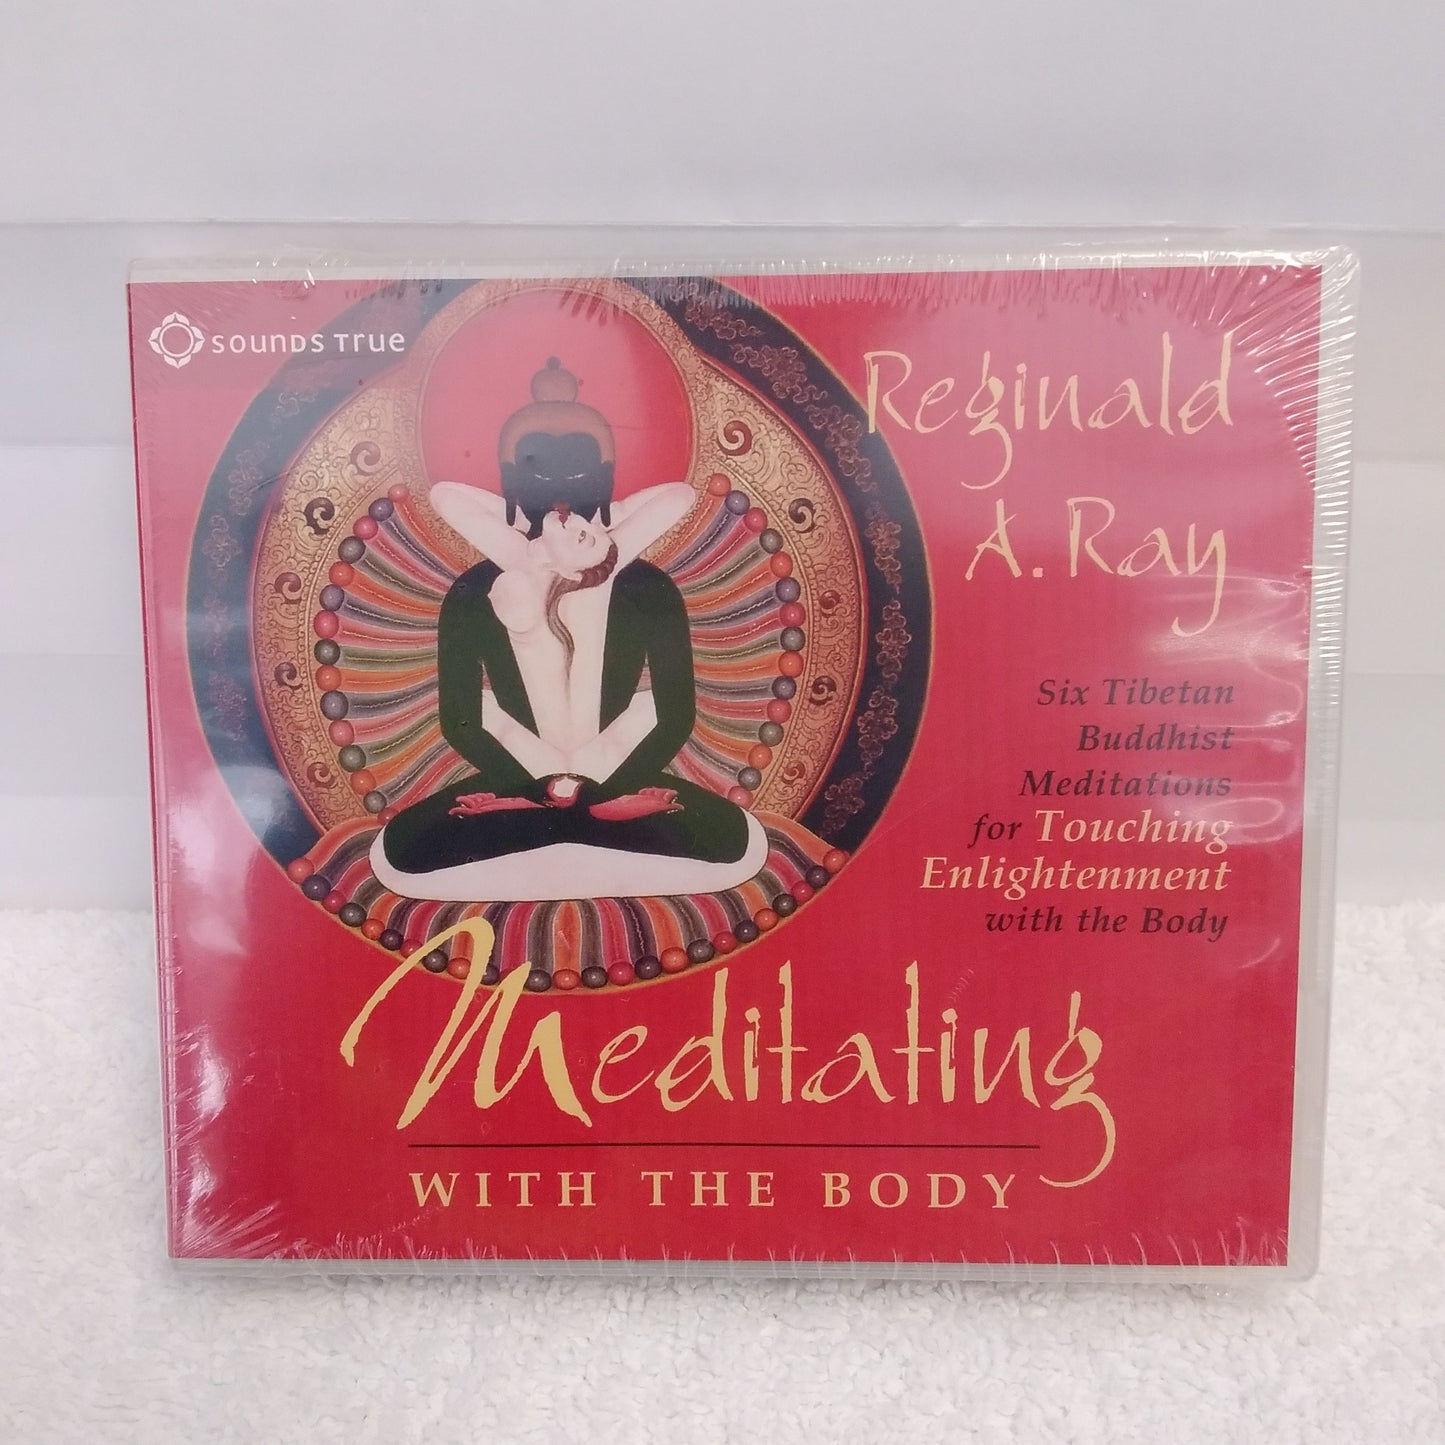 NIB - Sound True "Meditating with the Body" by Reginald A. Ray - 4 CD Set